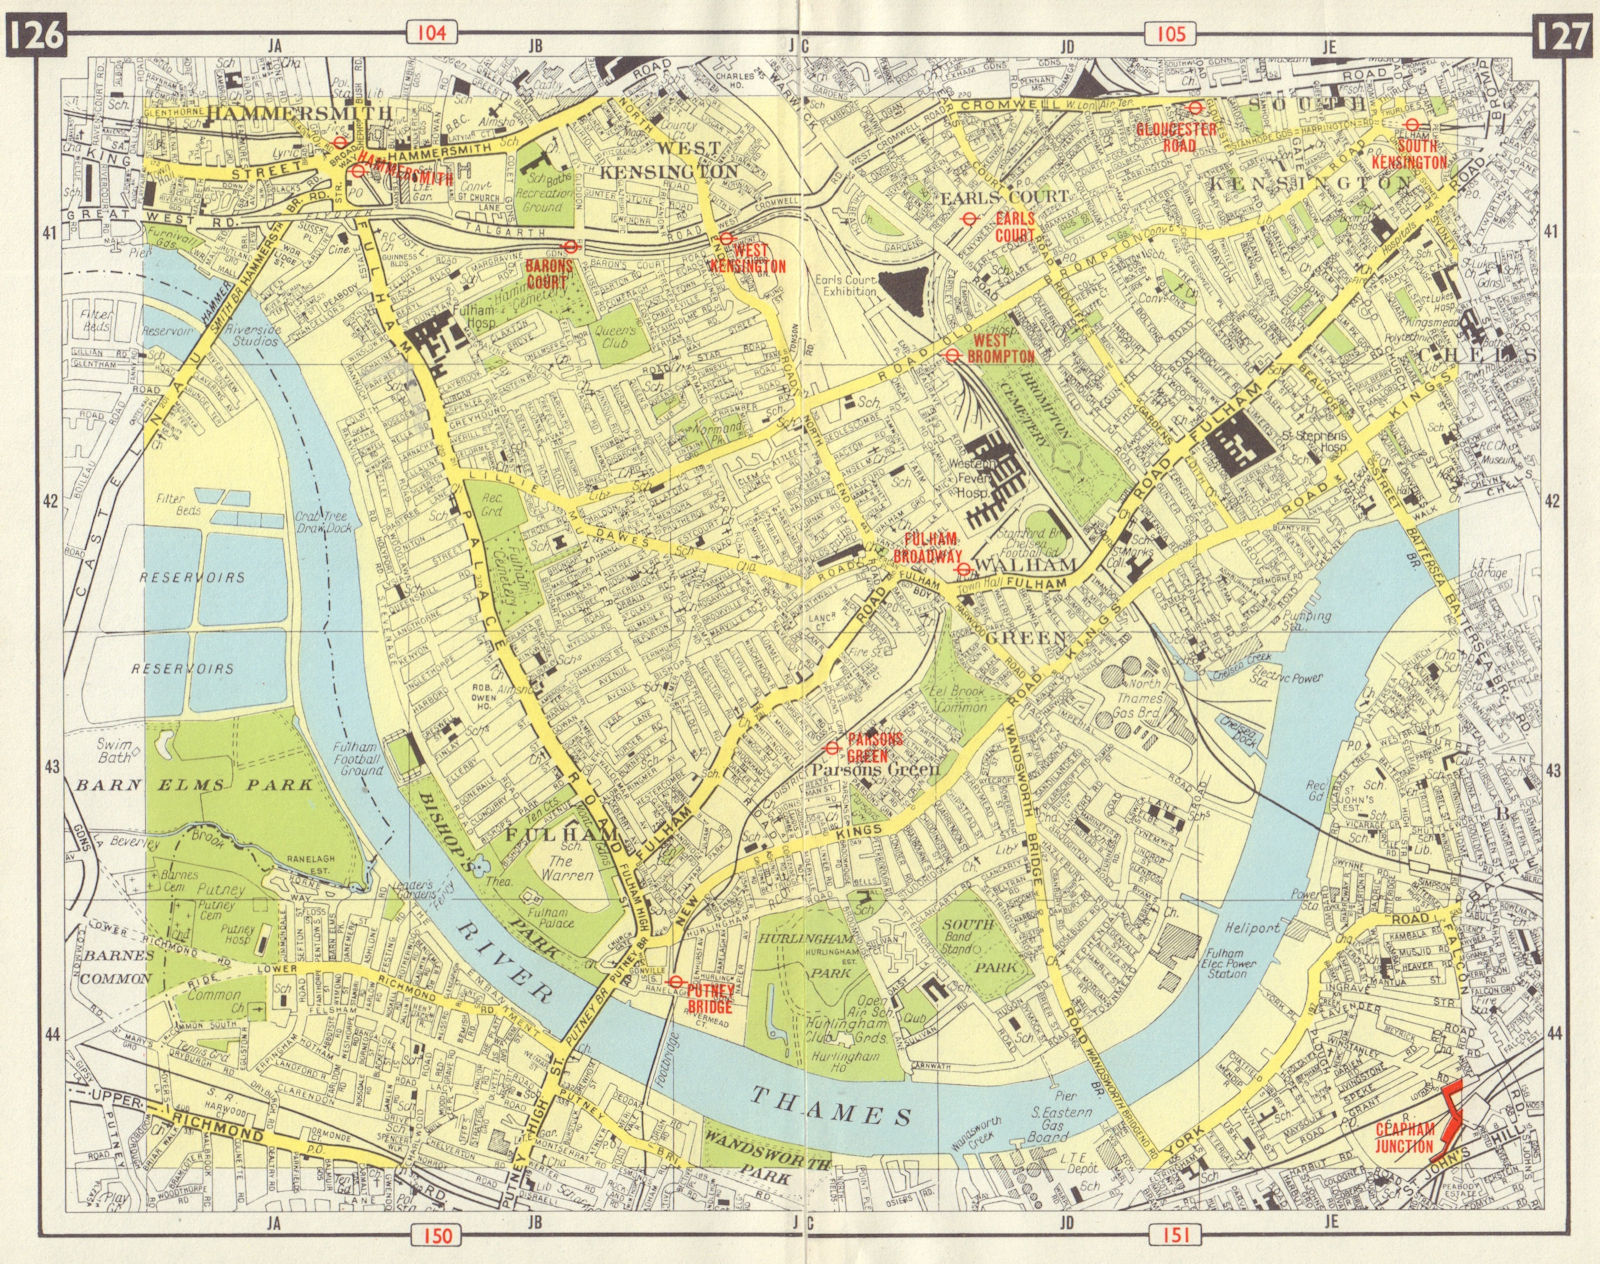 SW LONDON Fulham Walham Green Hammersmith South Kensington Earls Court 1965 map